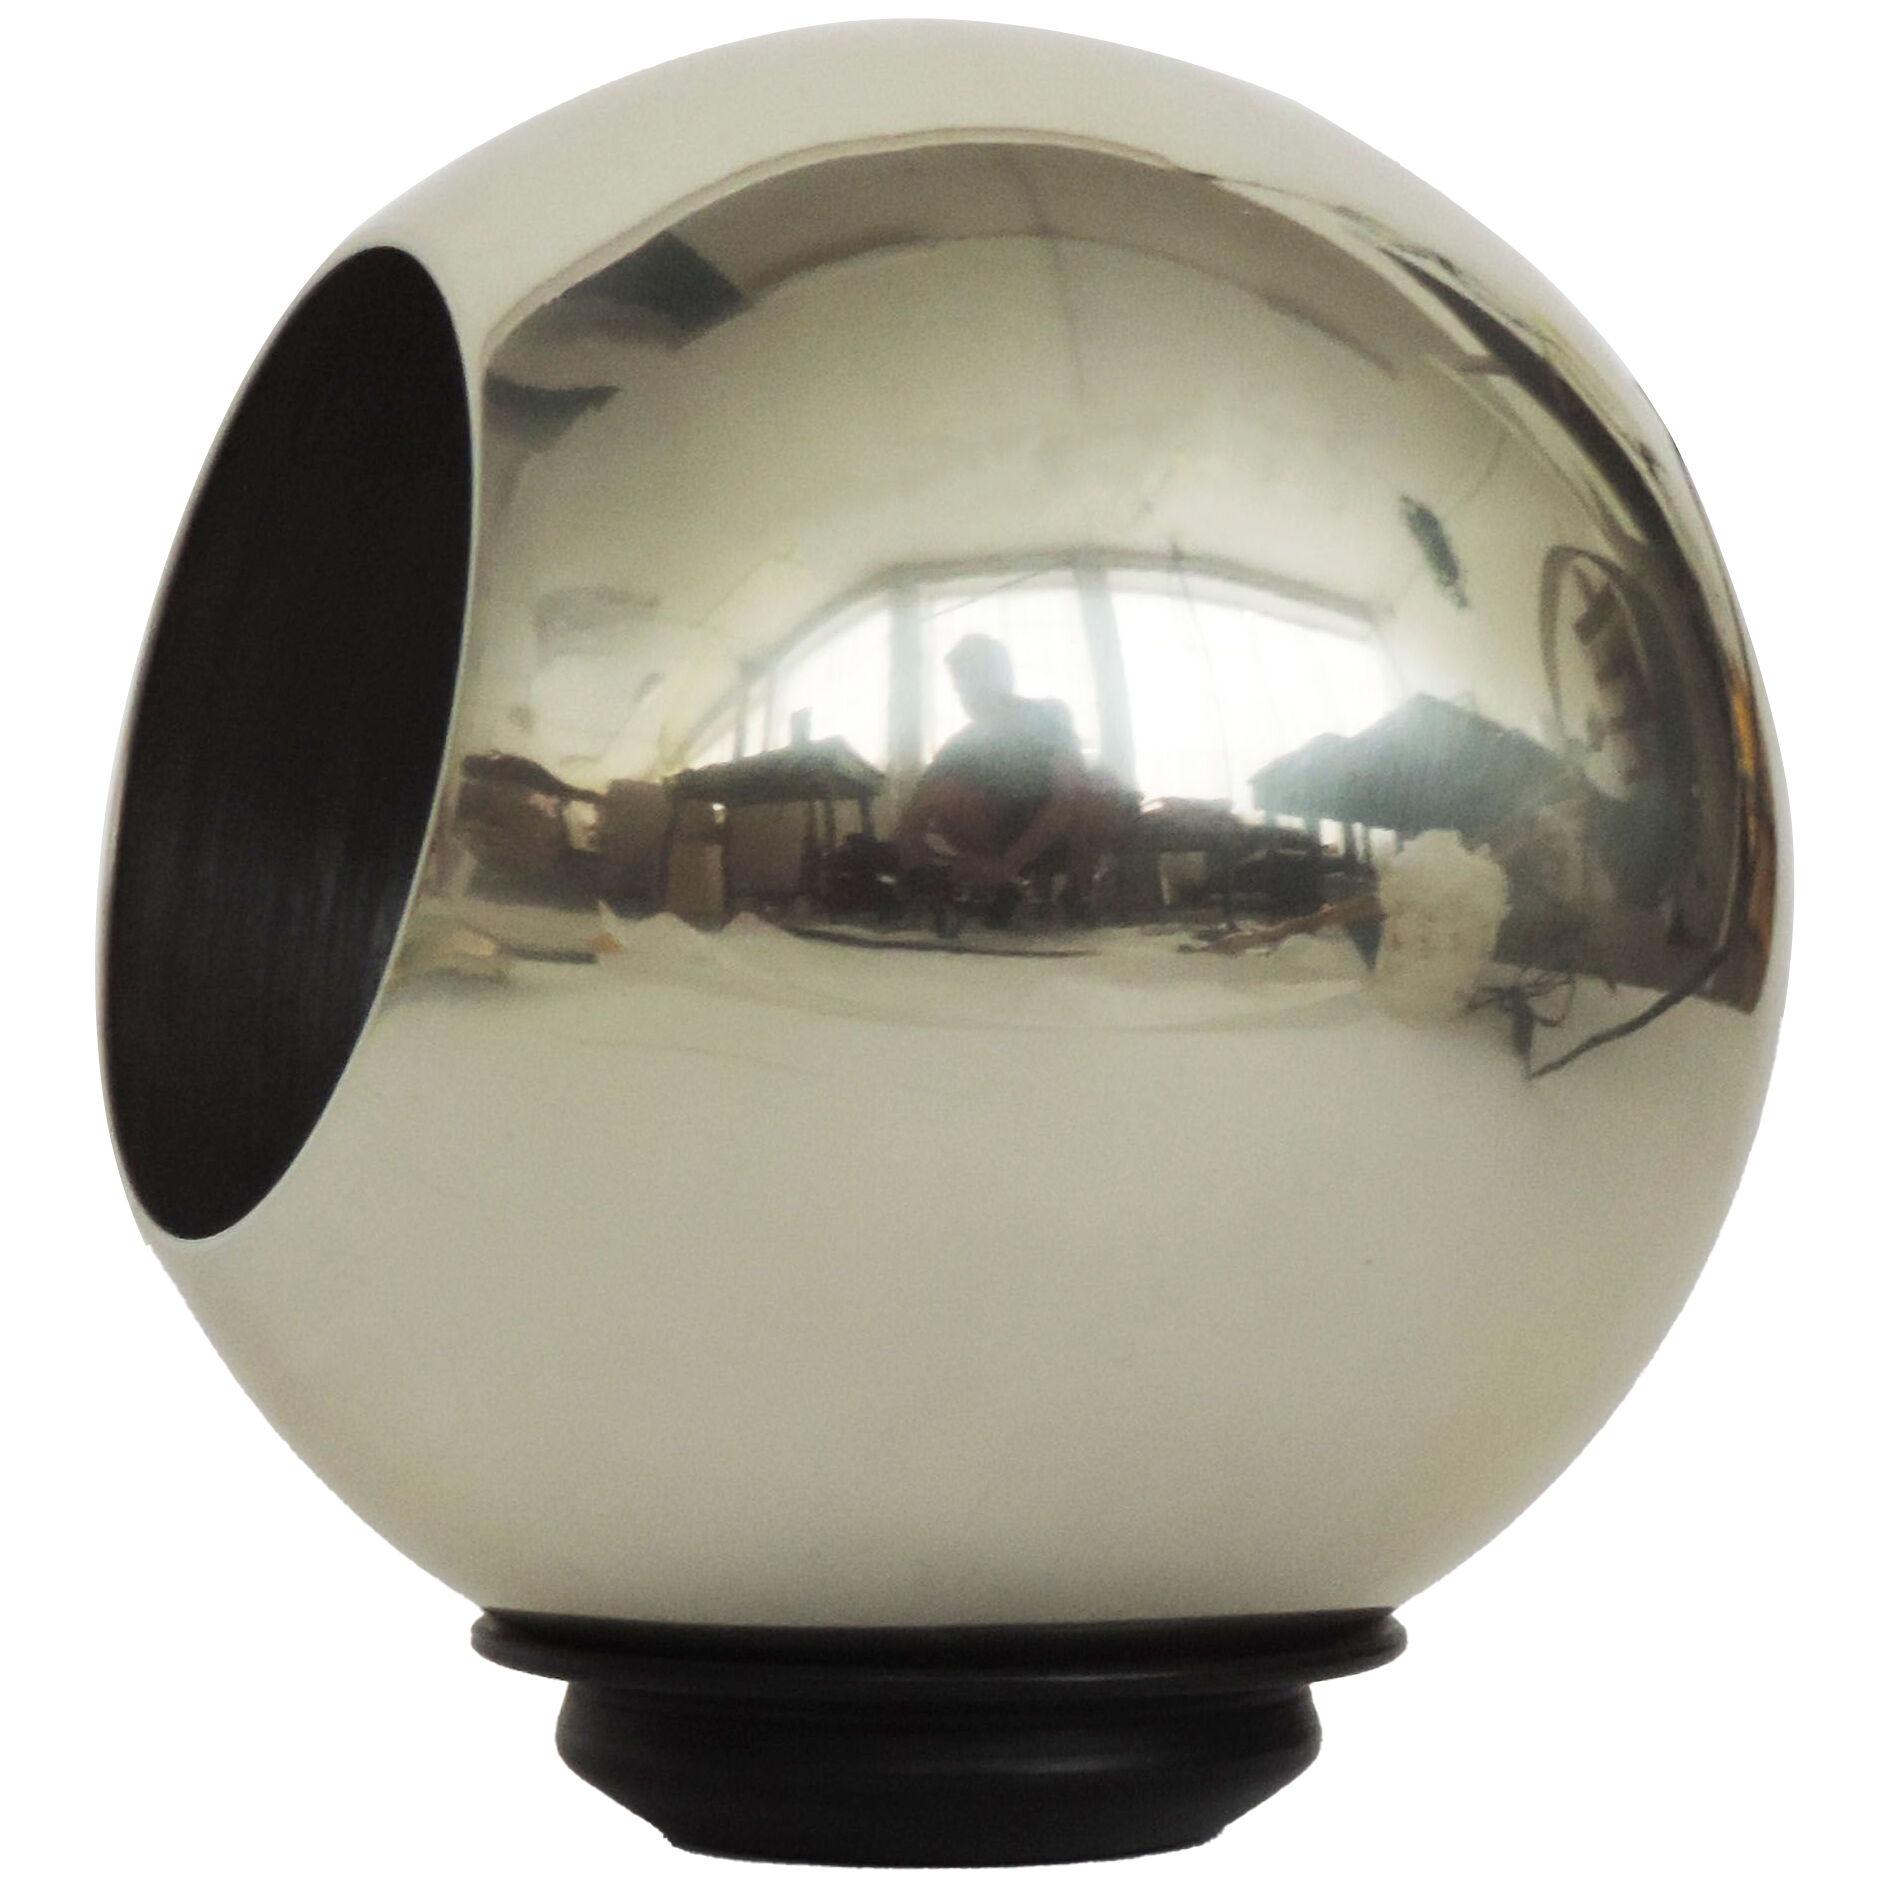 Gino Sarfatti Iconic Ball Table Lamp for Arteluce Mod. 586, Italy 1960s